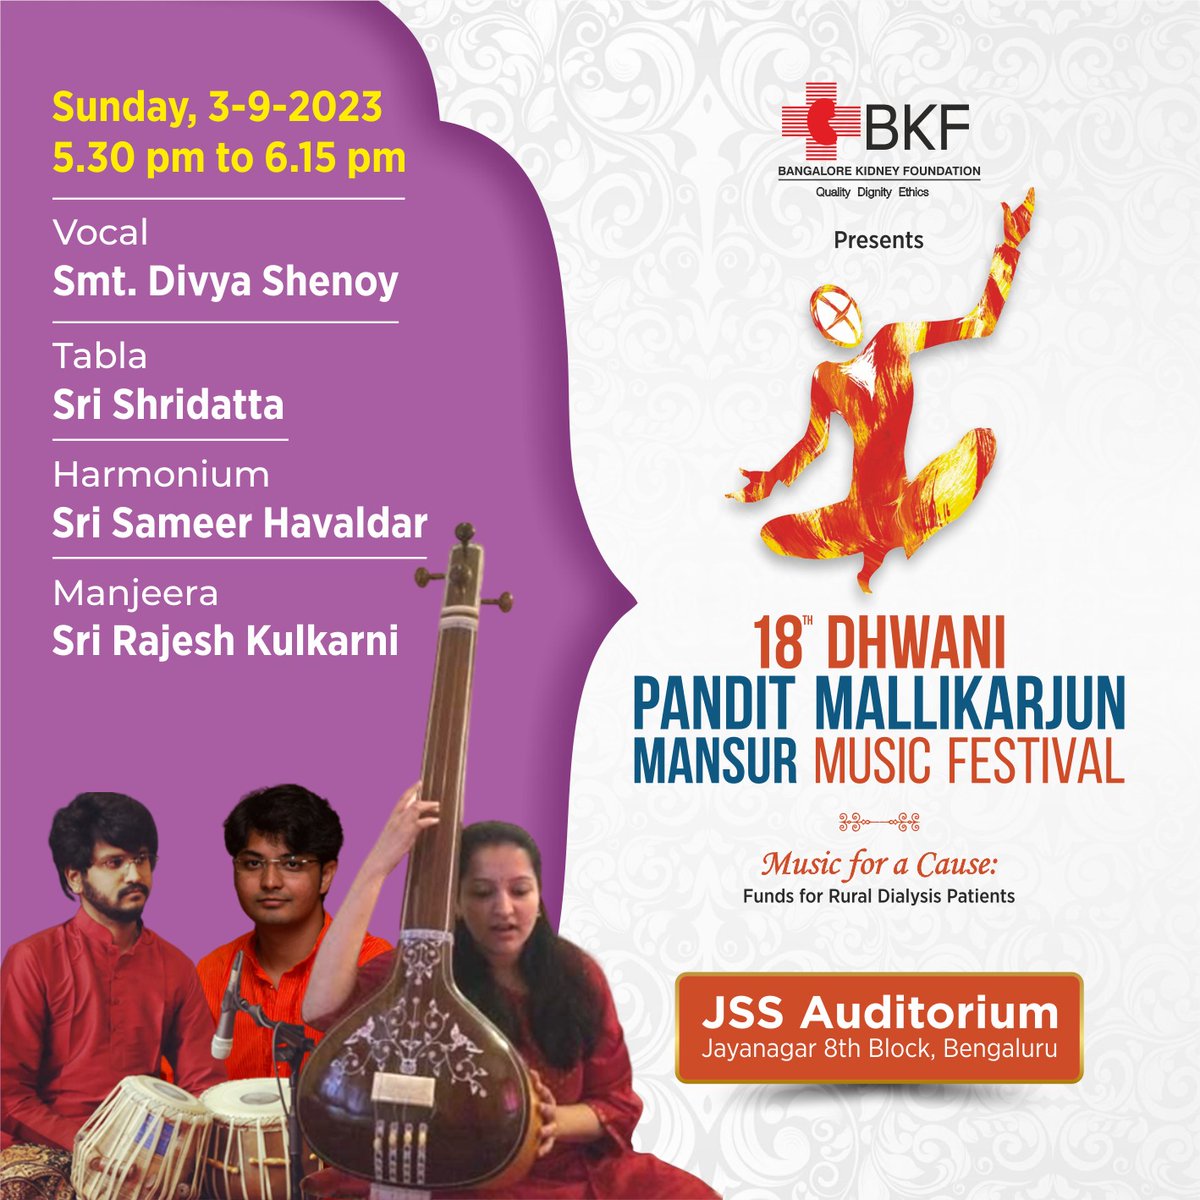 Come enjoy the fabulous performance by Smt Divya Shenoy, Sri Shridatta, Sri Sameer Havaldar, and Sri Rajesh Kulkarni on September 3rd at the JSS auditorium in Bengaluru.

For donor passes, call us at +91 9901788354.

#Dhwani2023 #hindustanimusicfestival #FundraiserEvent